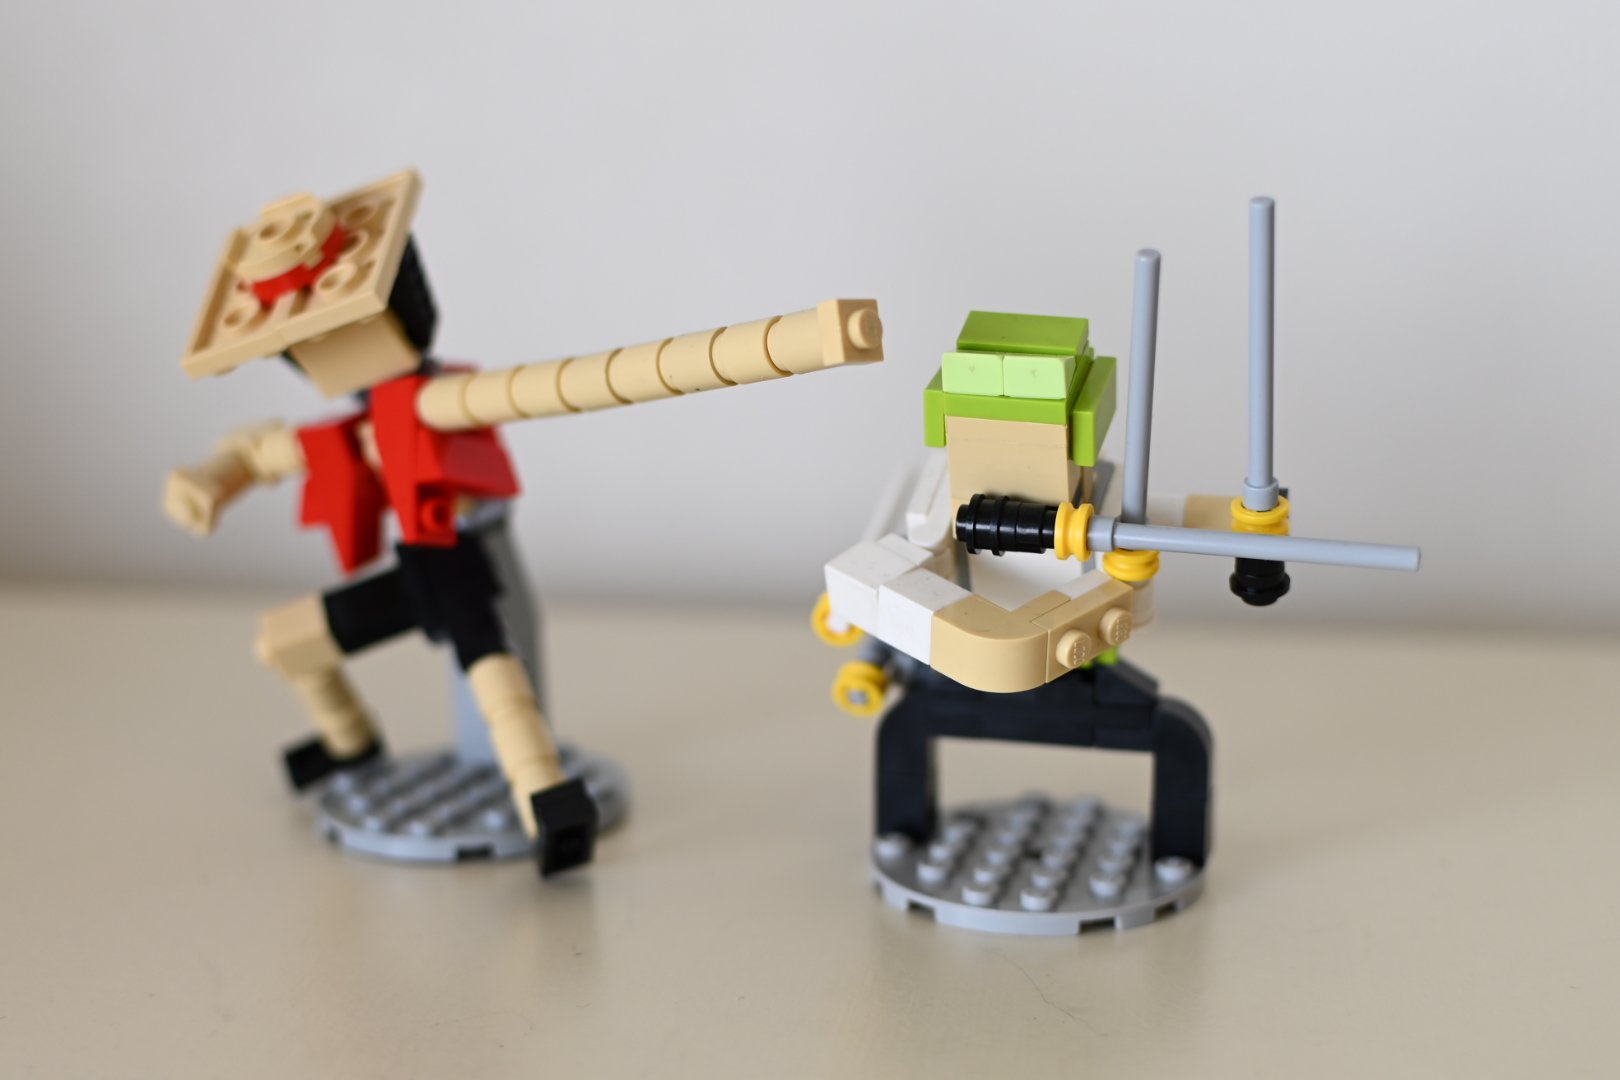 تويتر Legolith على تويتر レゴでルフィとゾロを作ってみました Lego ワンピース T Co Kvqghl7cu4